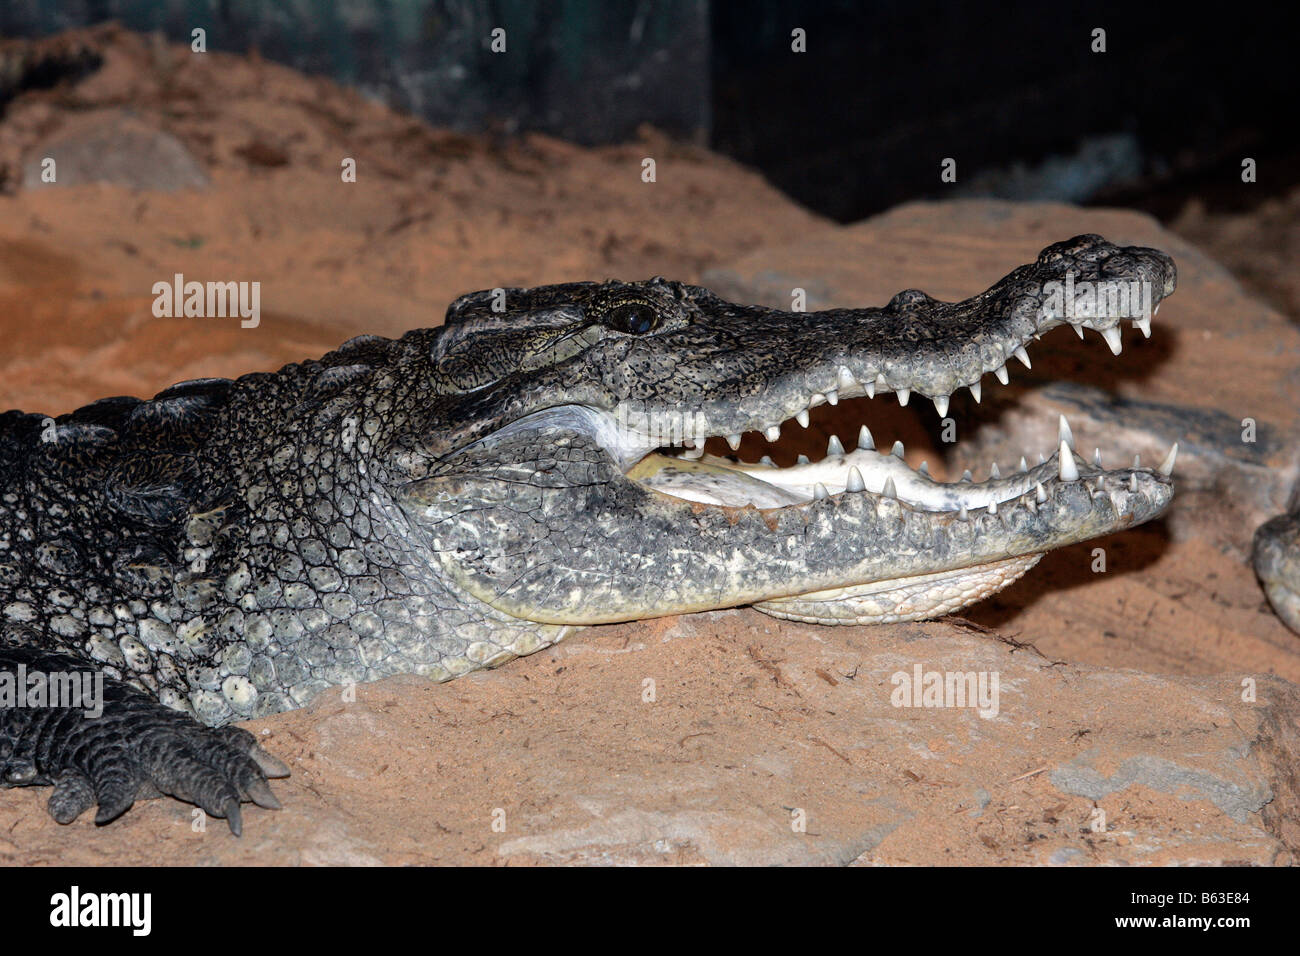 The head of a nile crocodile mouth open Stock Photo